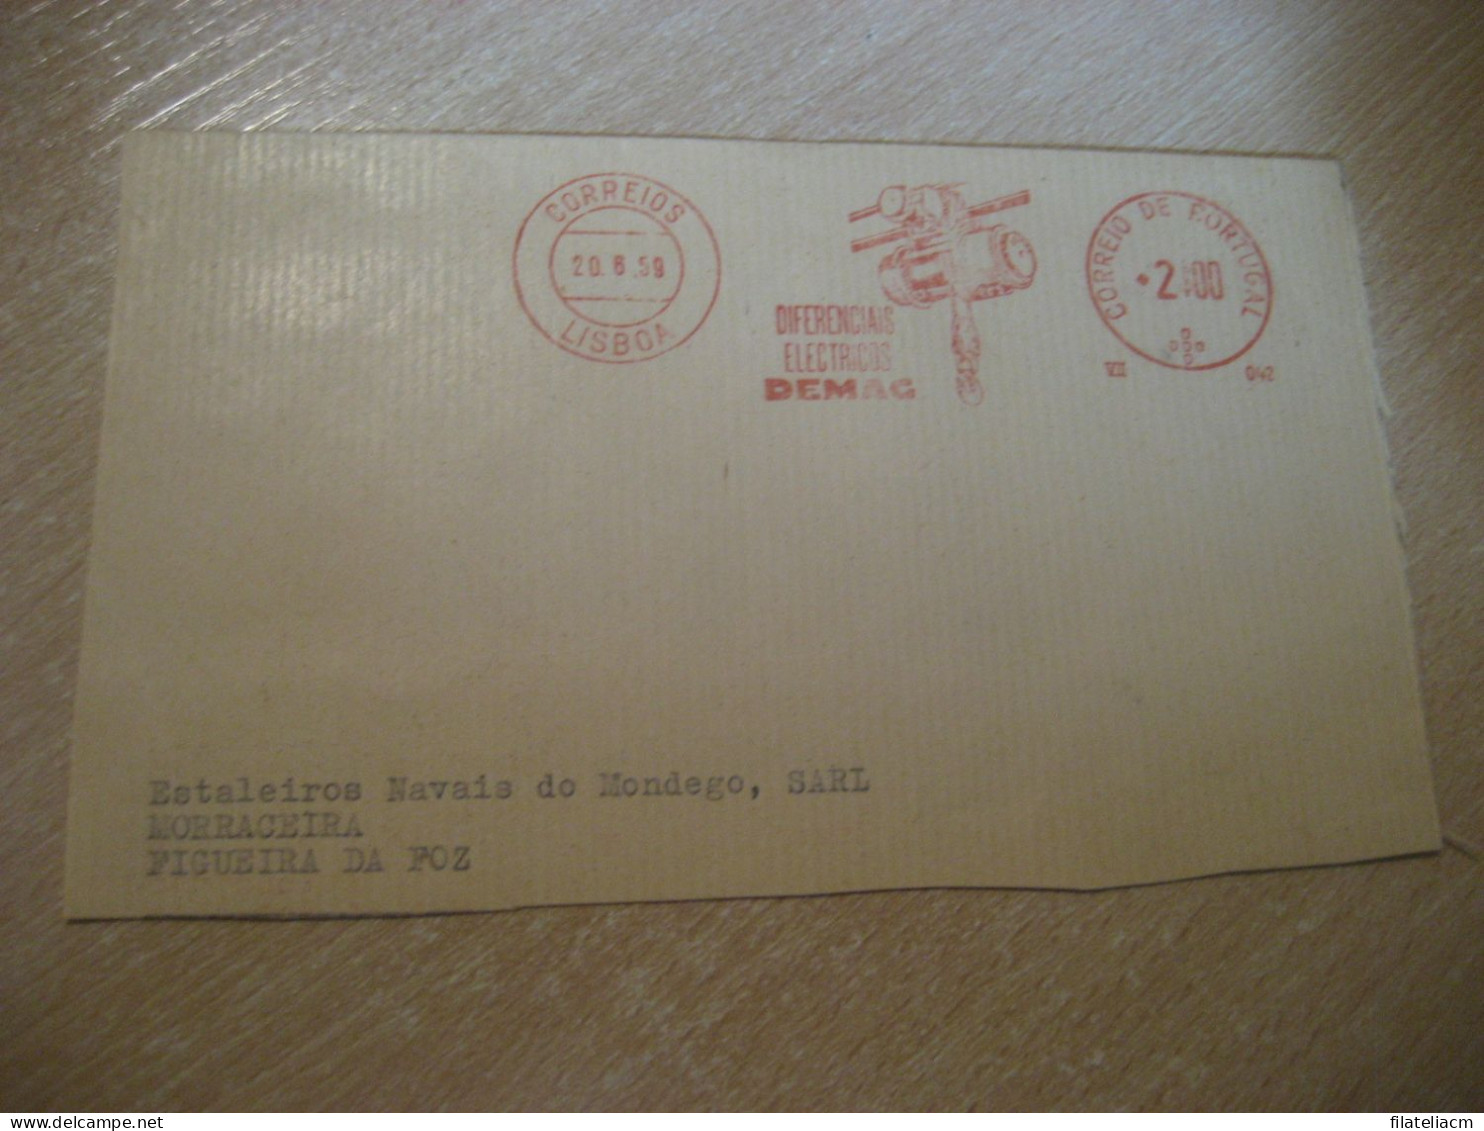 LISBOA 1959 To Figueira Da Foz DEMAC Diferenciais Electricos Physics Meter Mail Cancel Cut Cuted Cover PORTUGAL - Brieven En Documenten